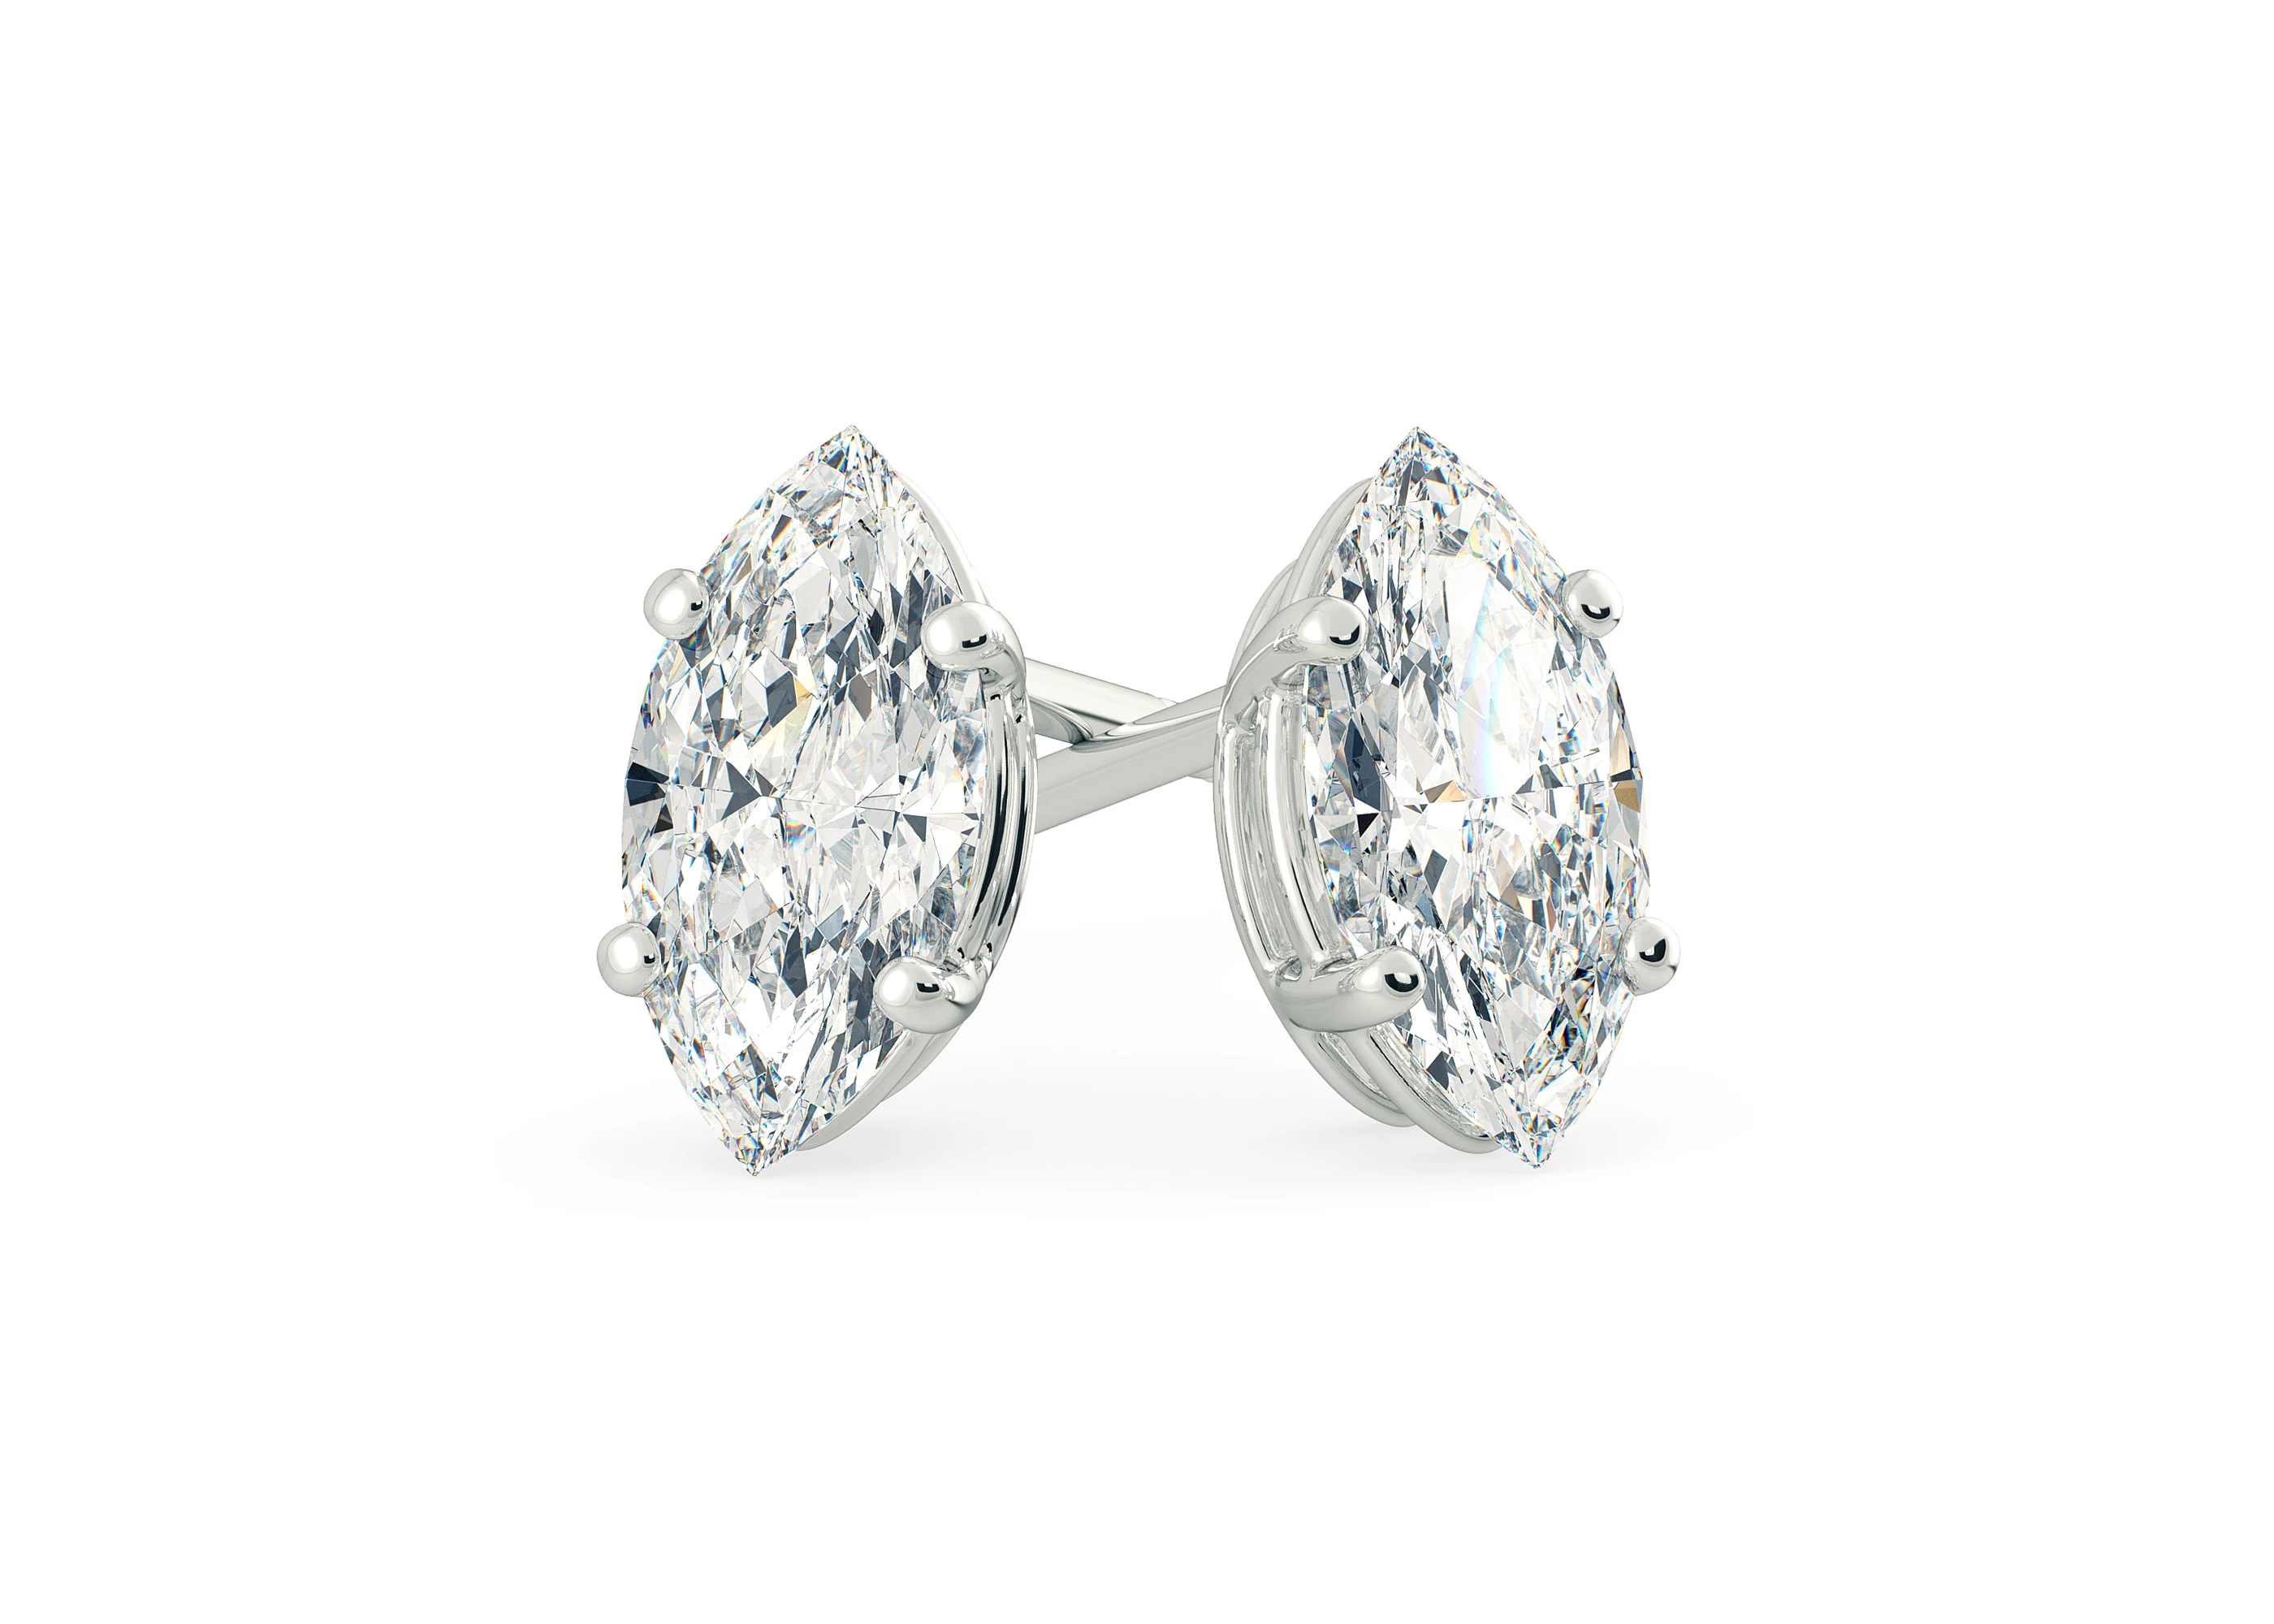 Half Carat Marquise Diamond Stud Earrings in 18K White Gold